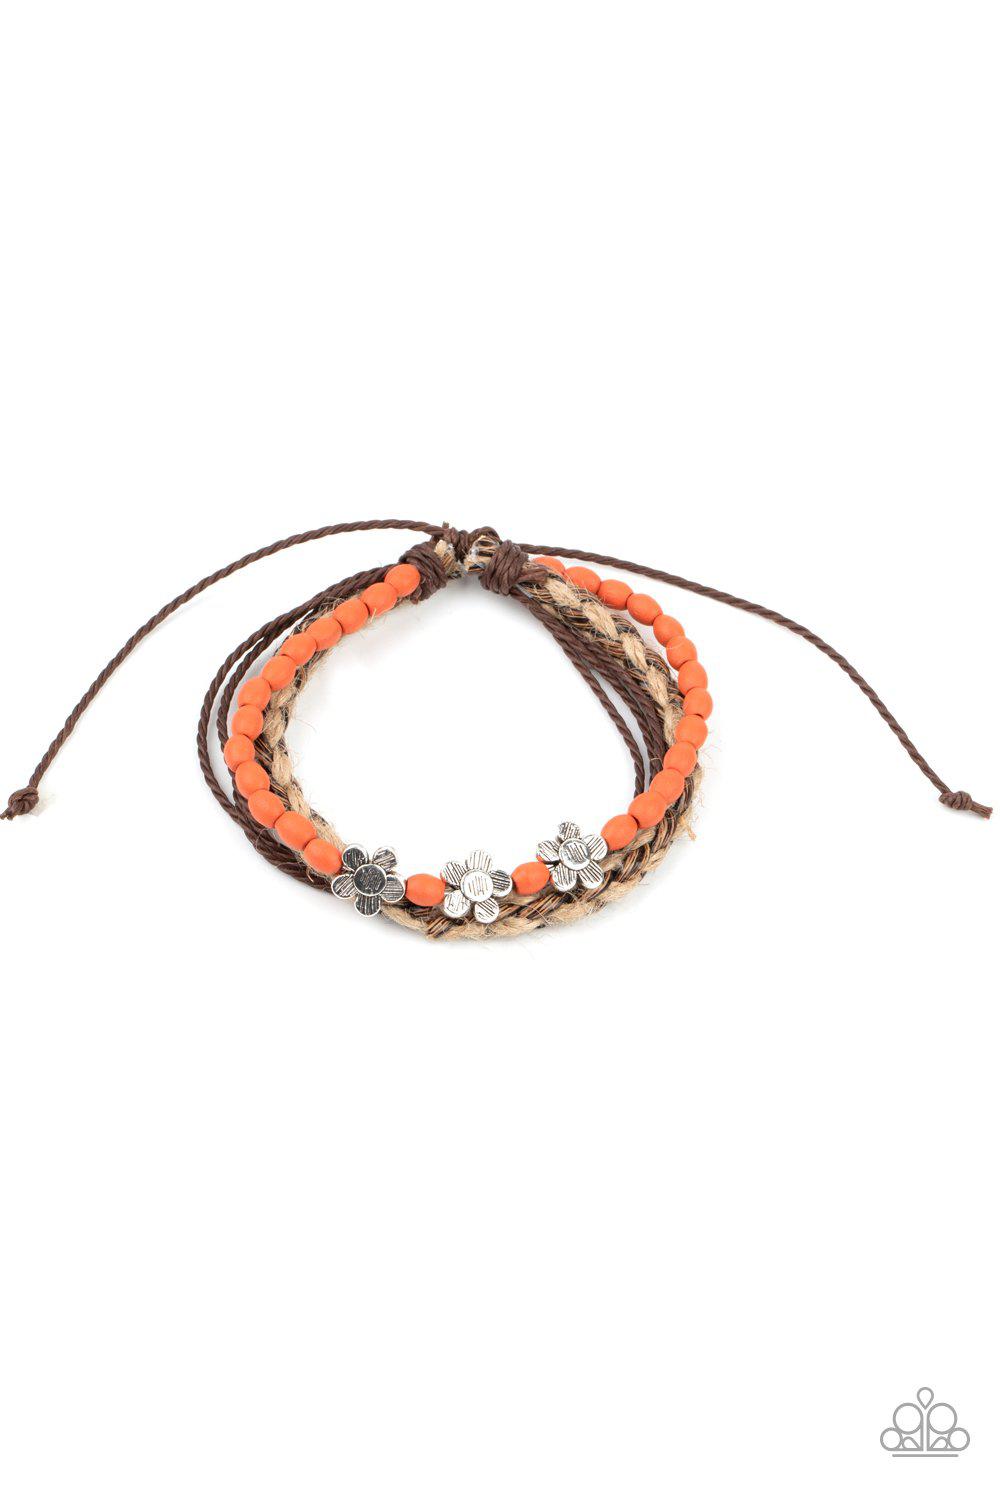 Raffia Remix Orange Wood and Silver Flower Urban Sliding Knot Bracelet - Paparazzi Accessories- lightbox - CarasShop.com - $5 Jewelry by Cara Jewels